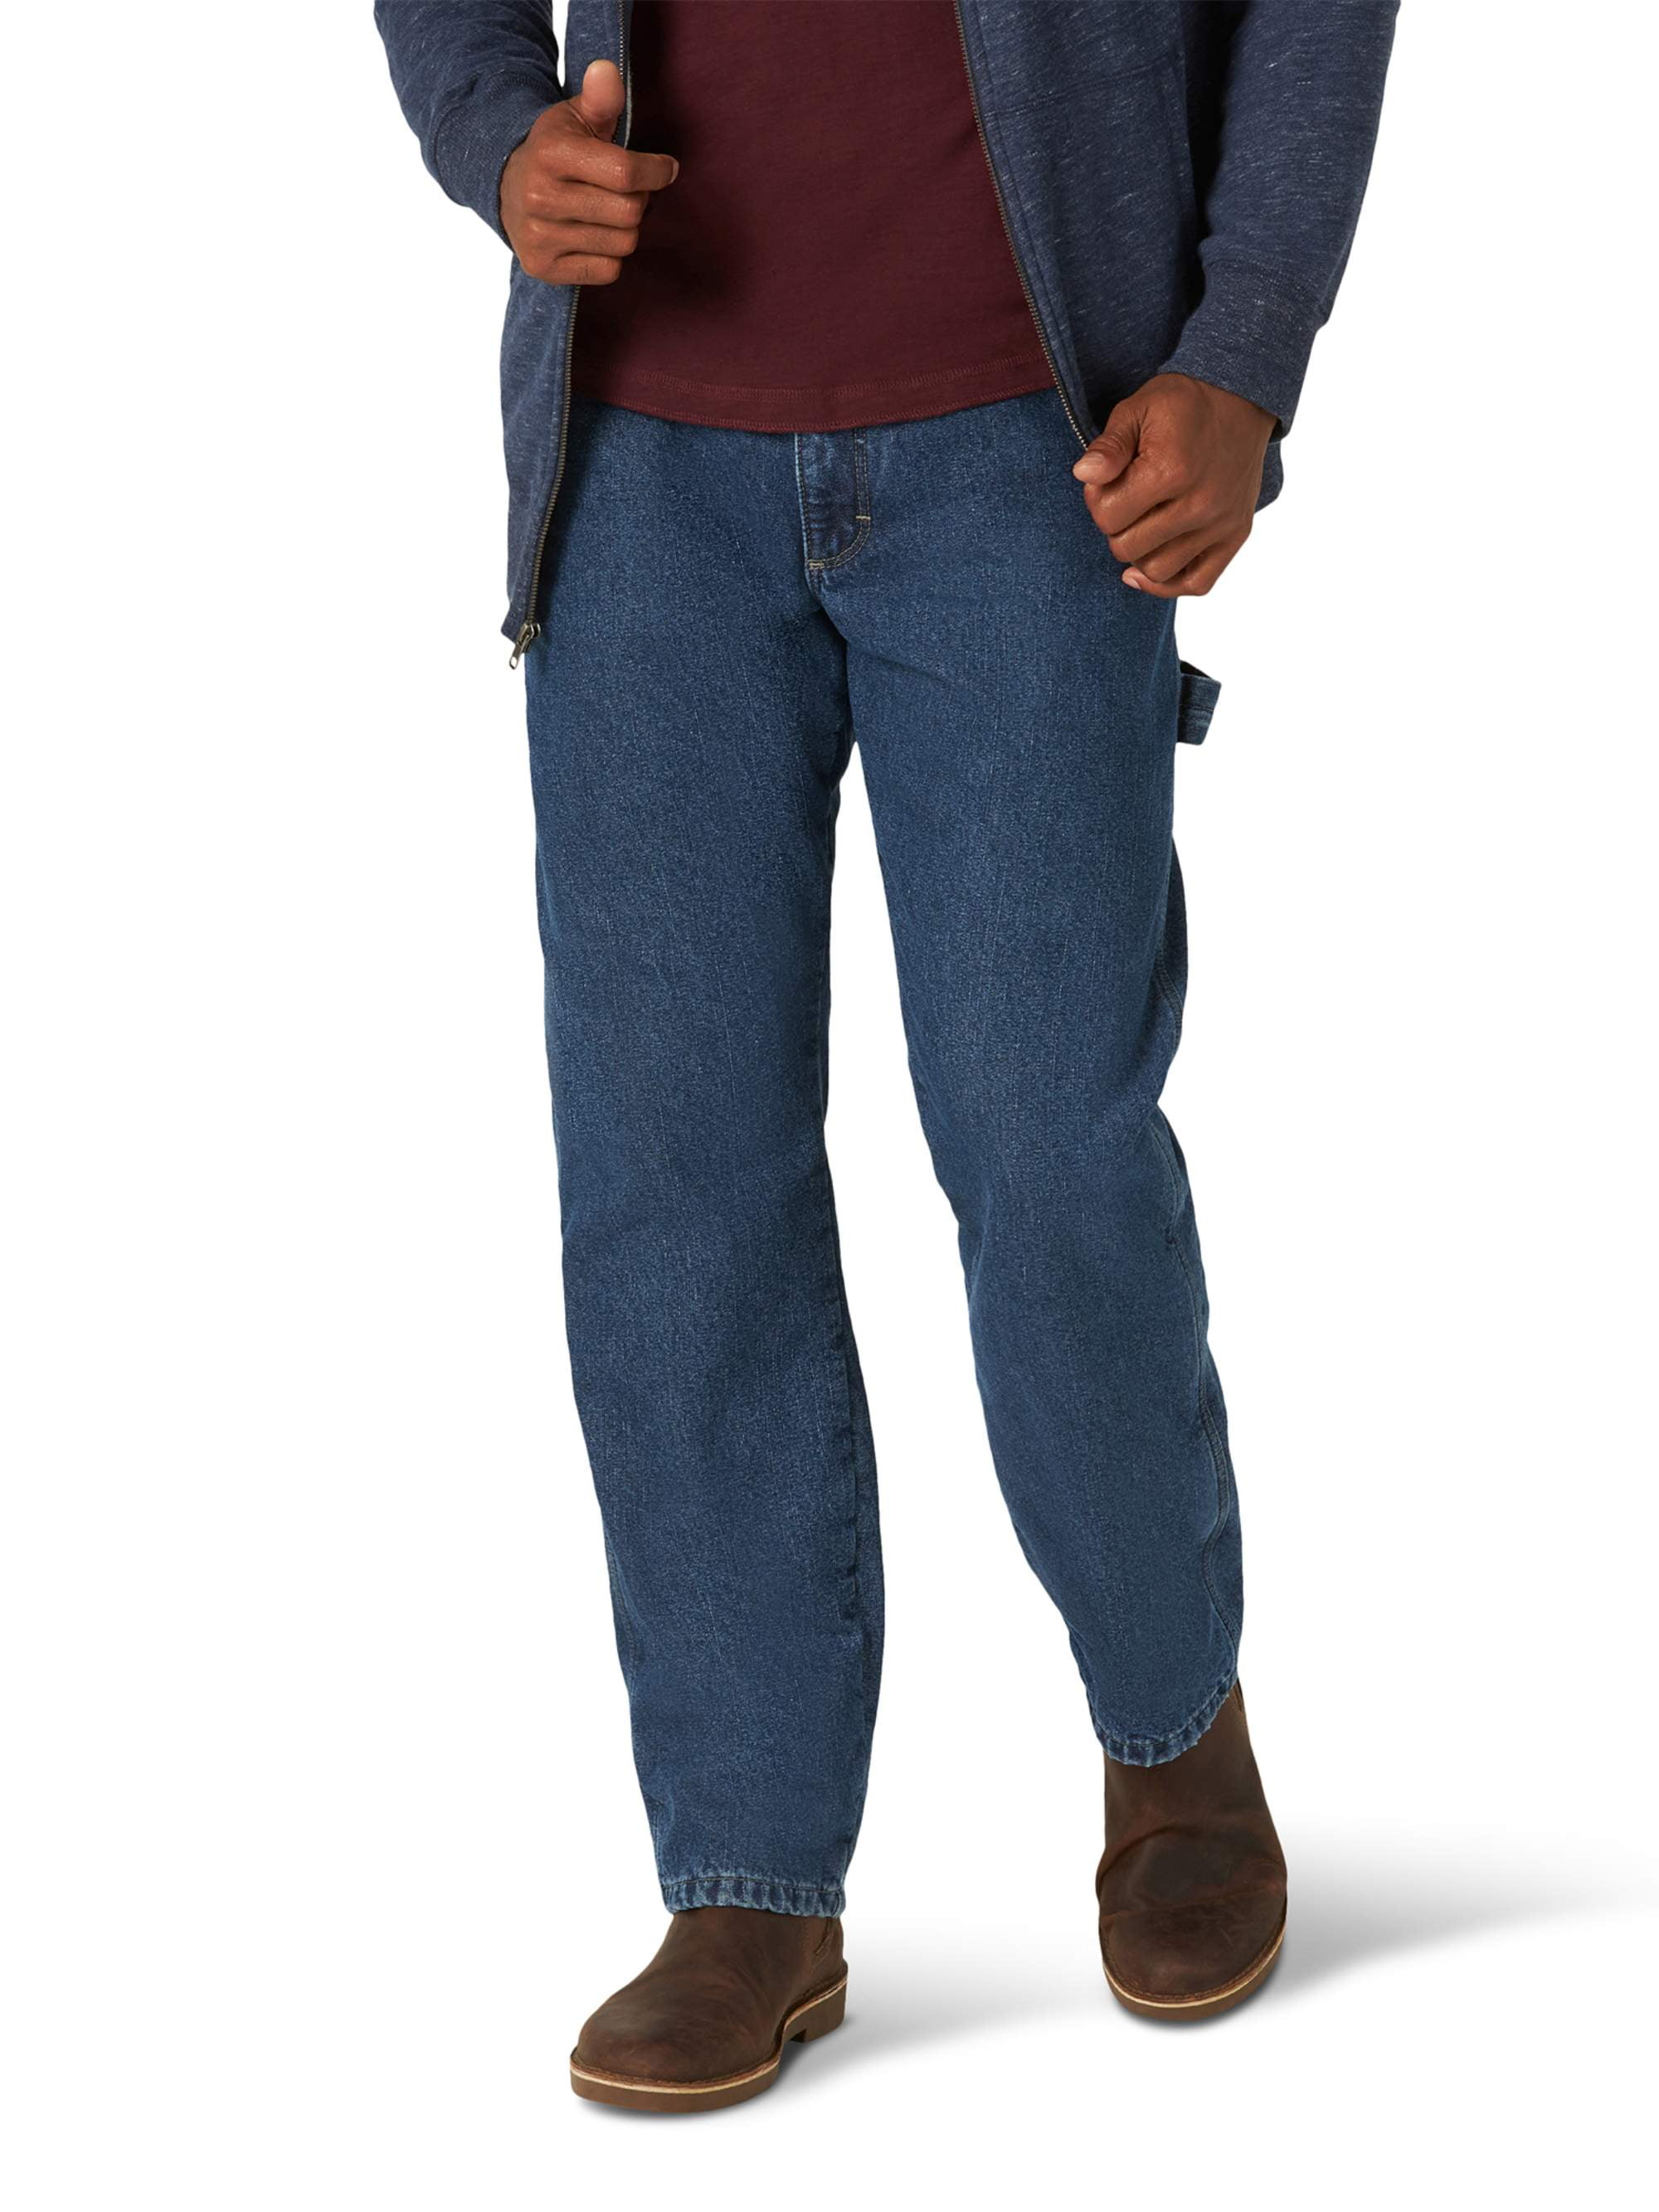 Wrangler Men's Fleece Lined Jean 